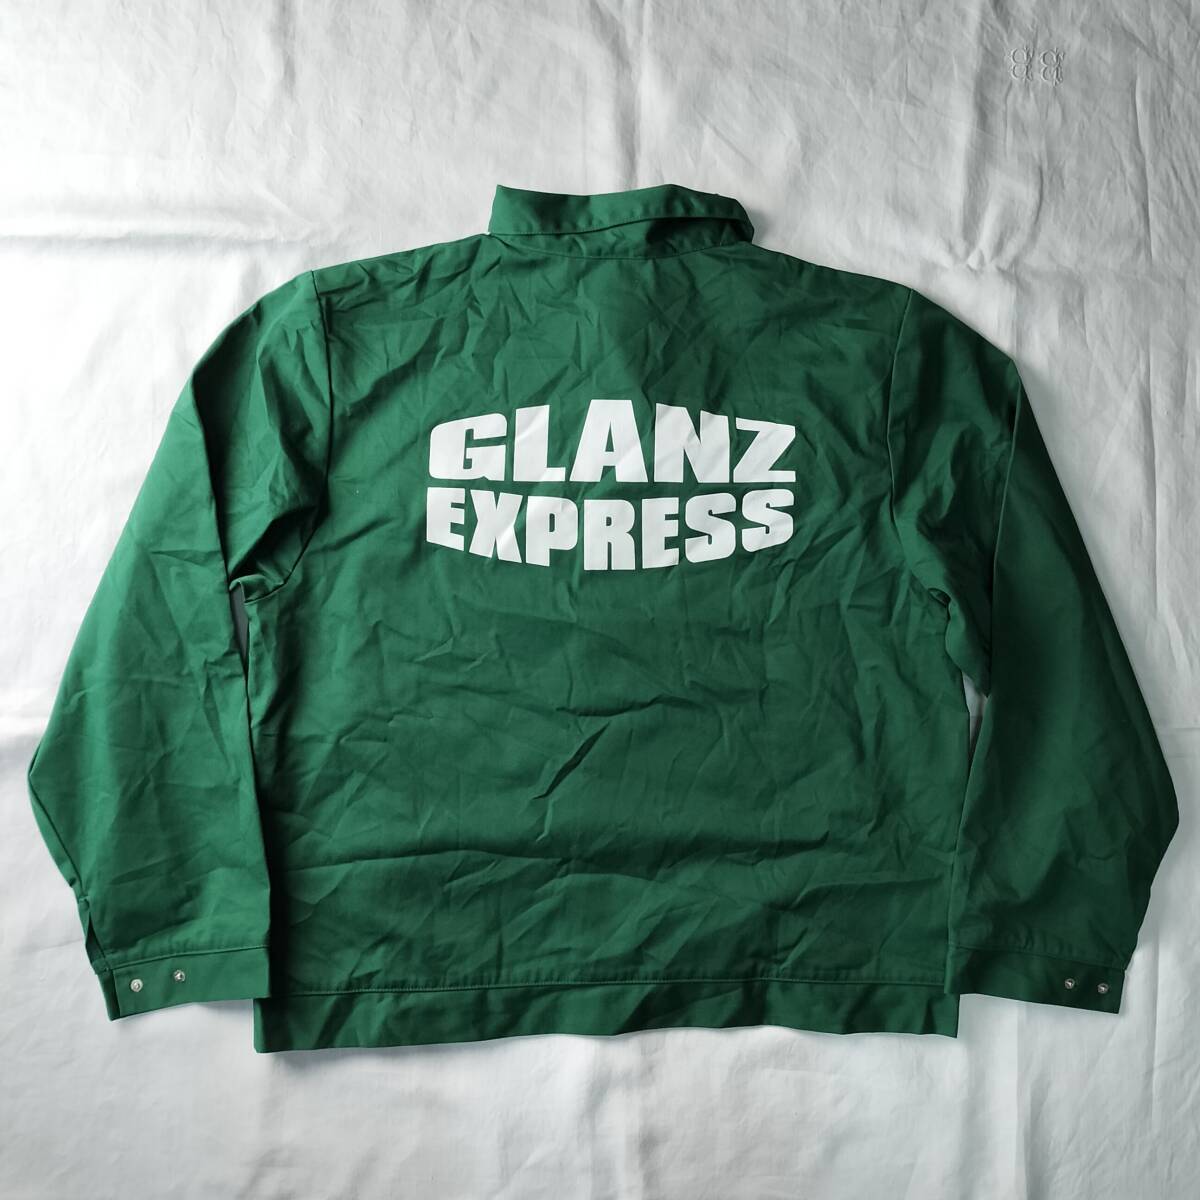 1990's~2000's ユーロワークジャケット ヴィンテージ ヨーロッパワーク フランスワーク Europe vintage グリーン 緑 美品 希少_画像2